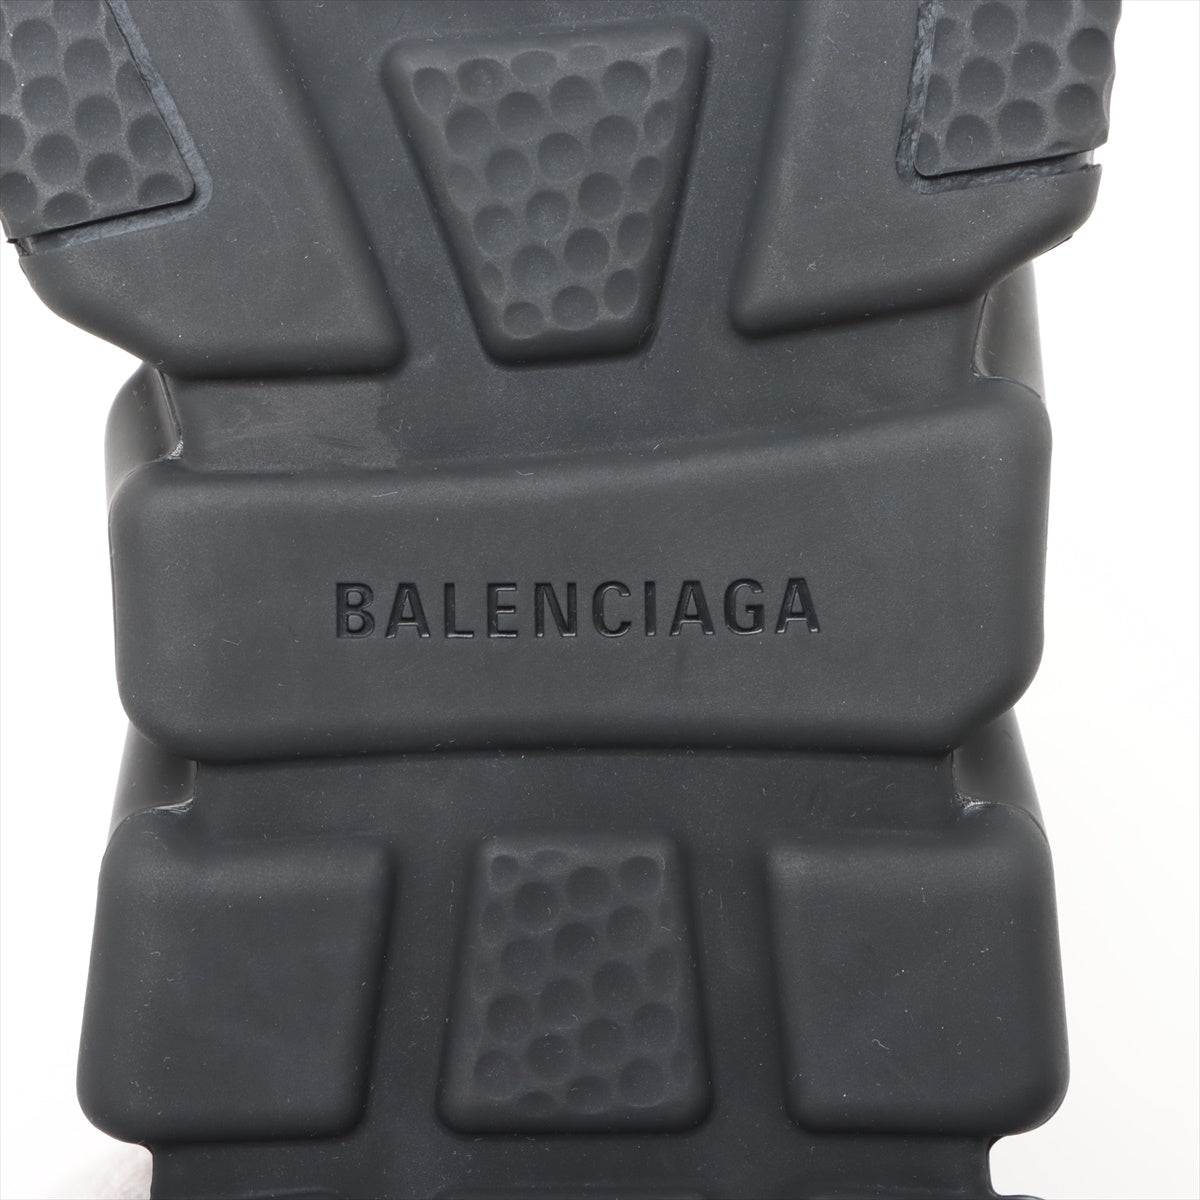 Balenciaga x Adidas Shoes 27.5cm Black x White 717591